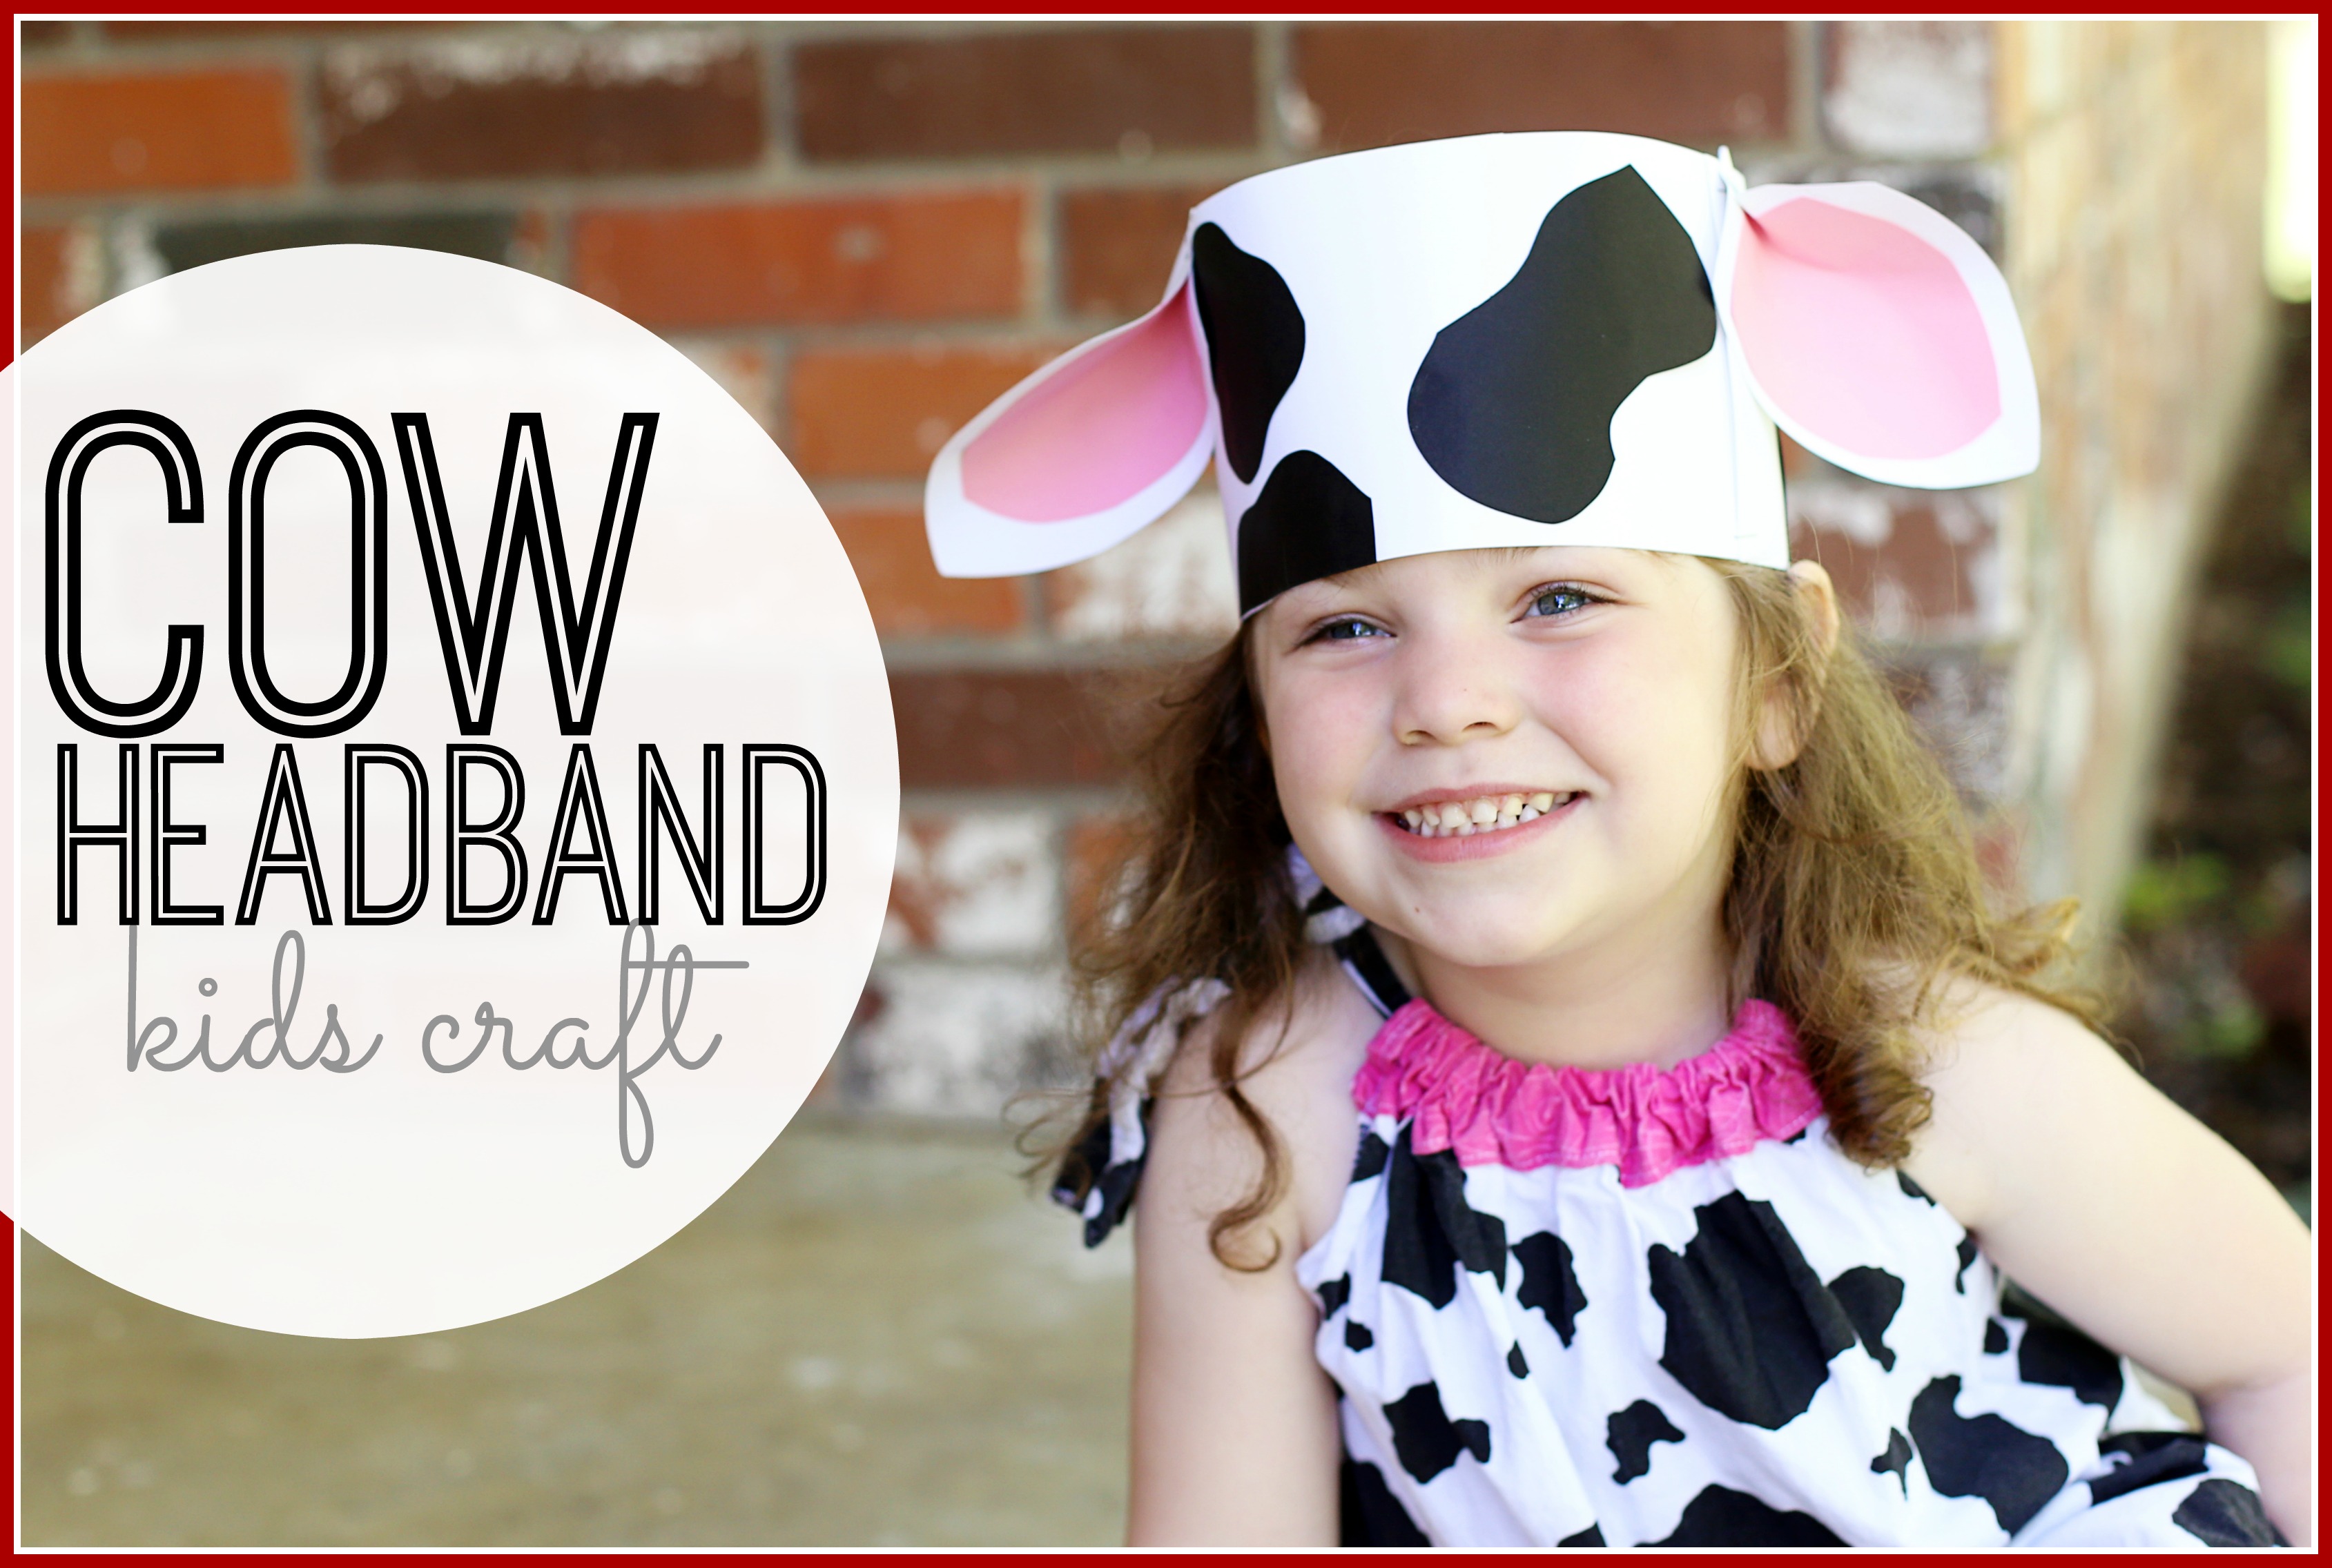 kids-craft-cow-headband-kansas-living-magazine